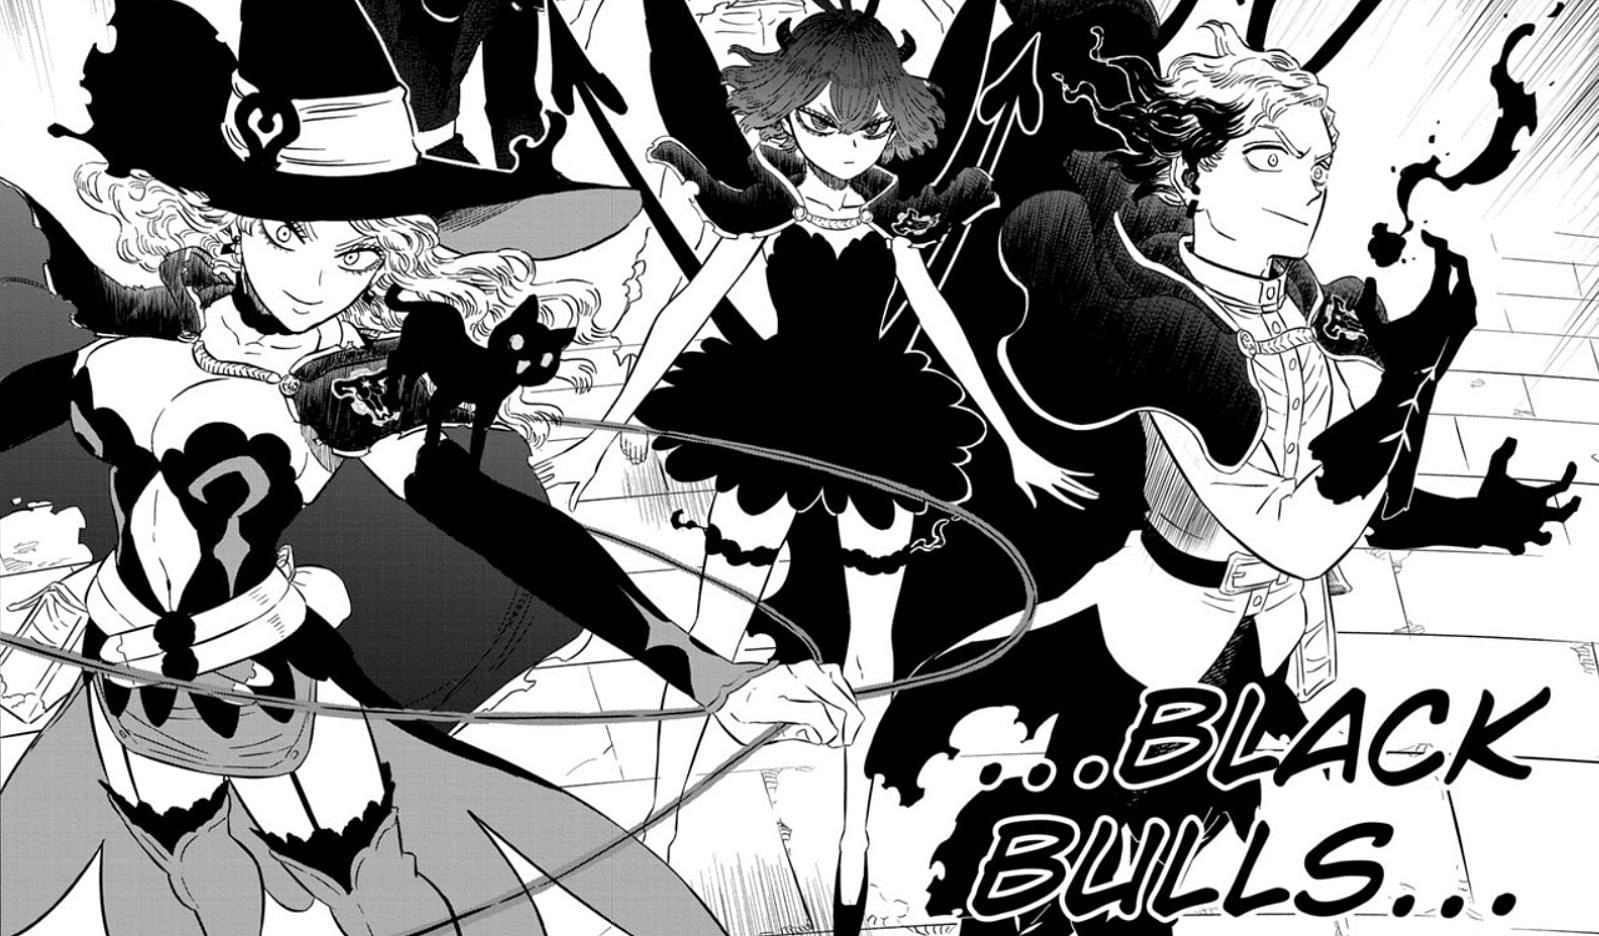 The Black Bulls as seen in the Black Clover manga (Image via Shueisha)